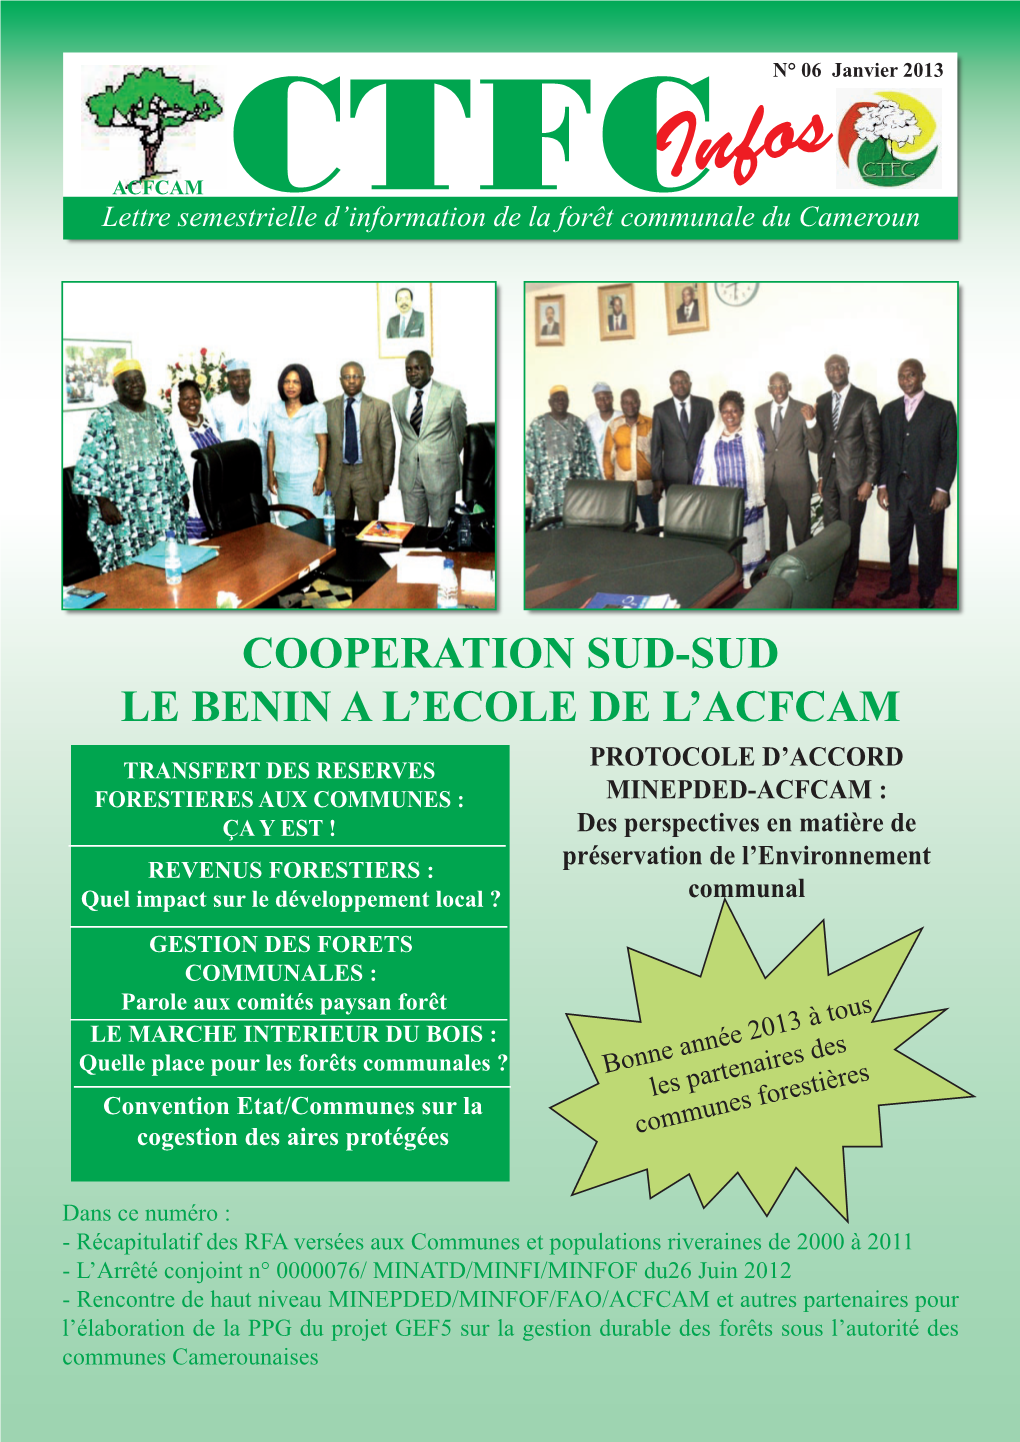 CTFC Infos - N° 06 Janvier 2013  N° 06 Janvier 2013 Infos SOMMAIRE ACFCAMINTERVIEW Lettre Semestrielle D’Information De La Forêt Communale Du Cameroun